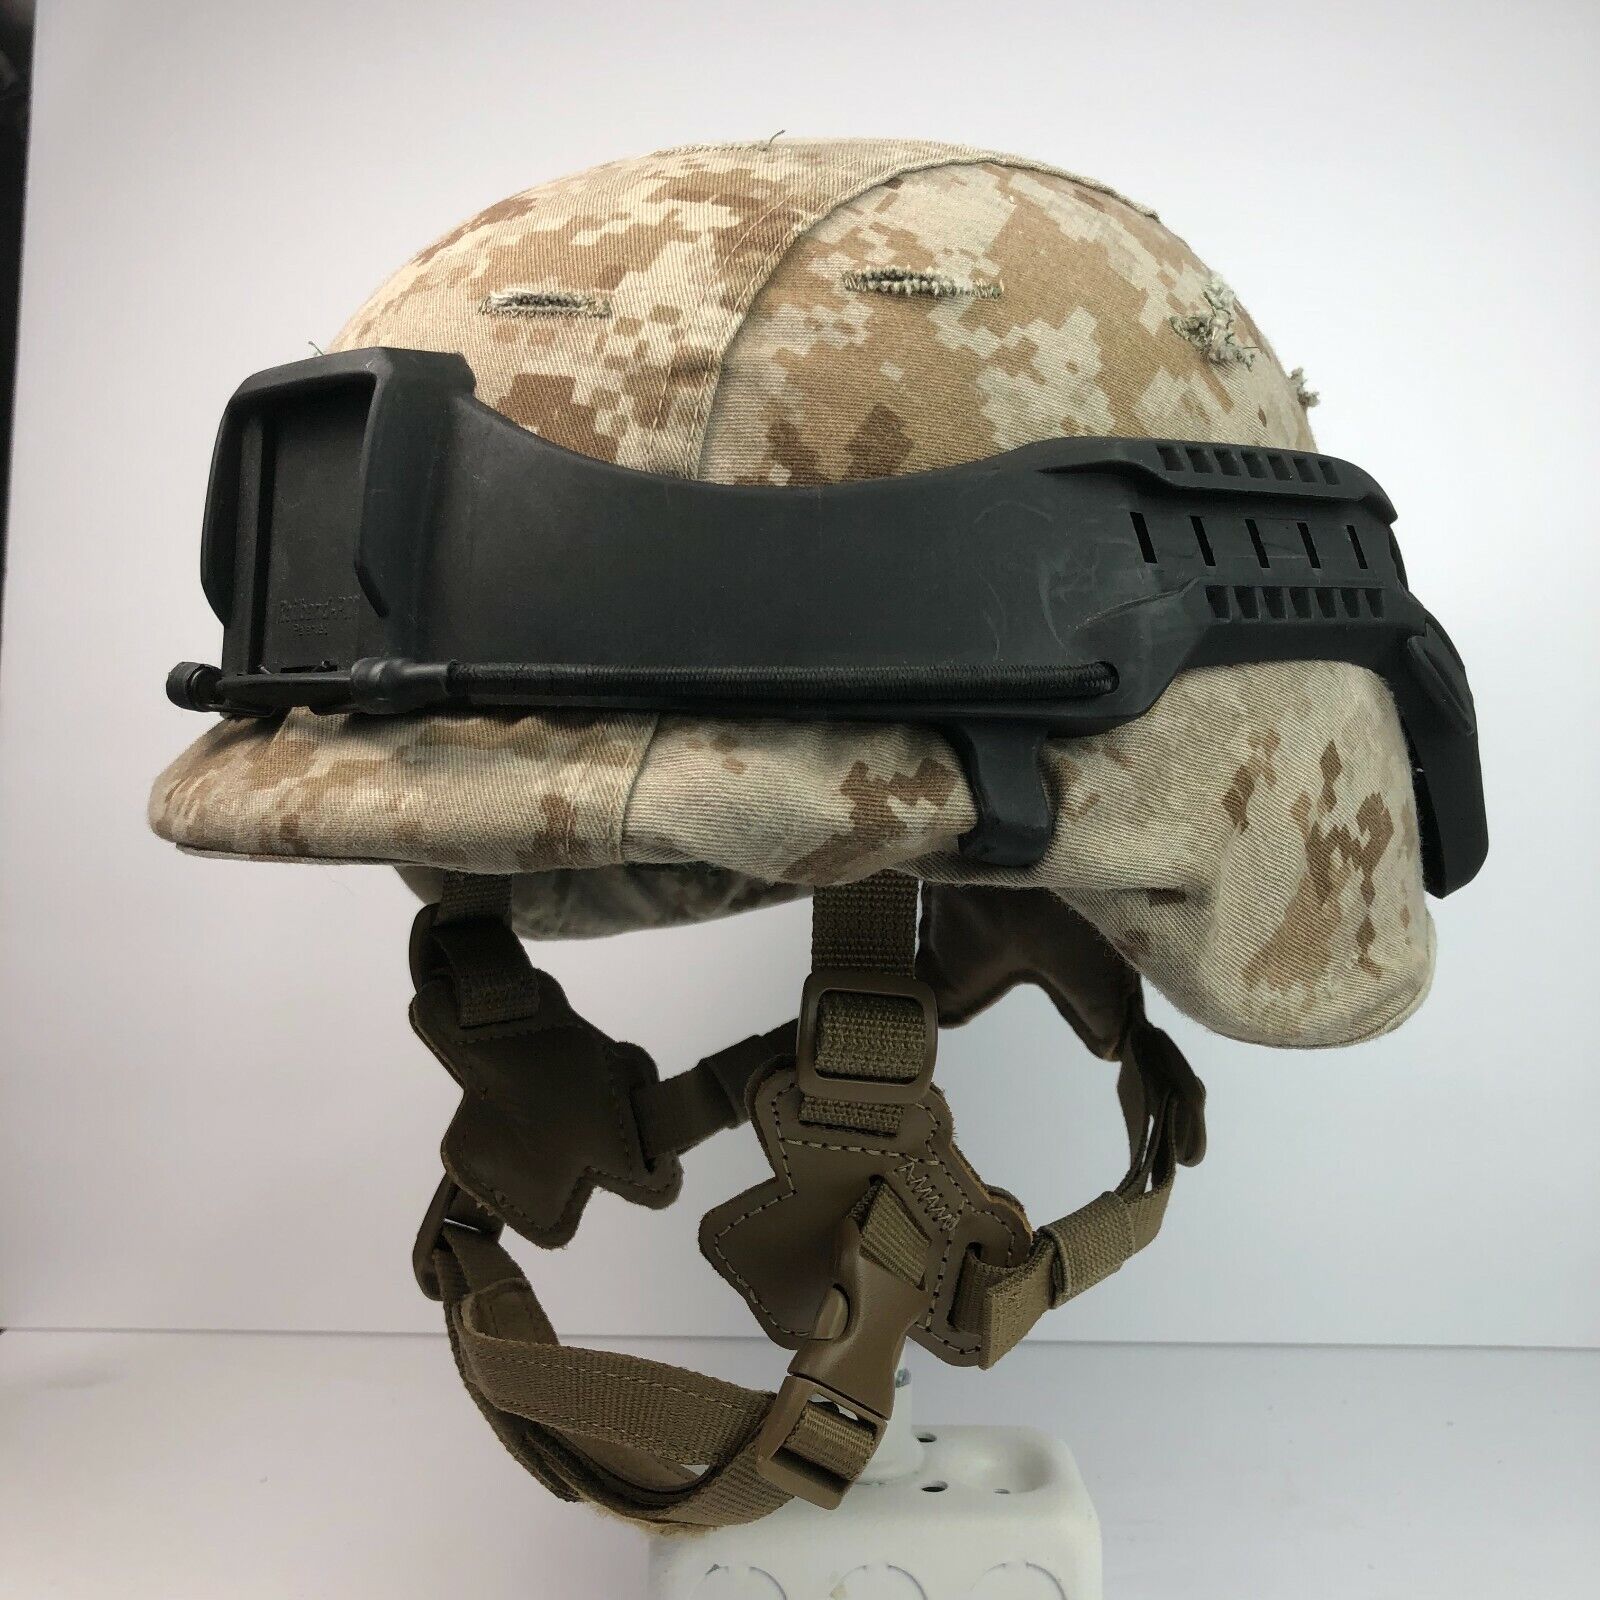 Boltless Helmet Rail NVG Mount System Fits USMC ARMY LWH MICH ACH ECH PASGT Etc.